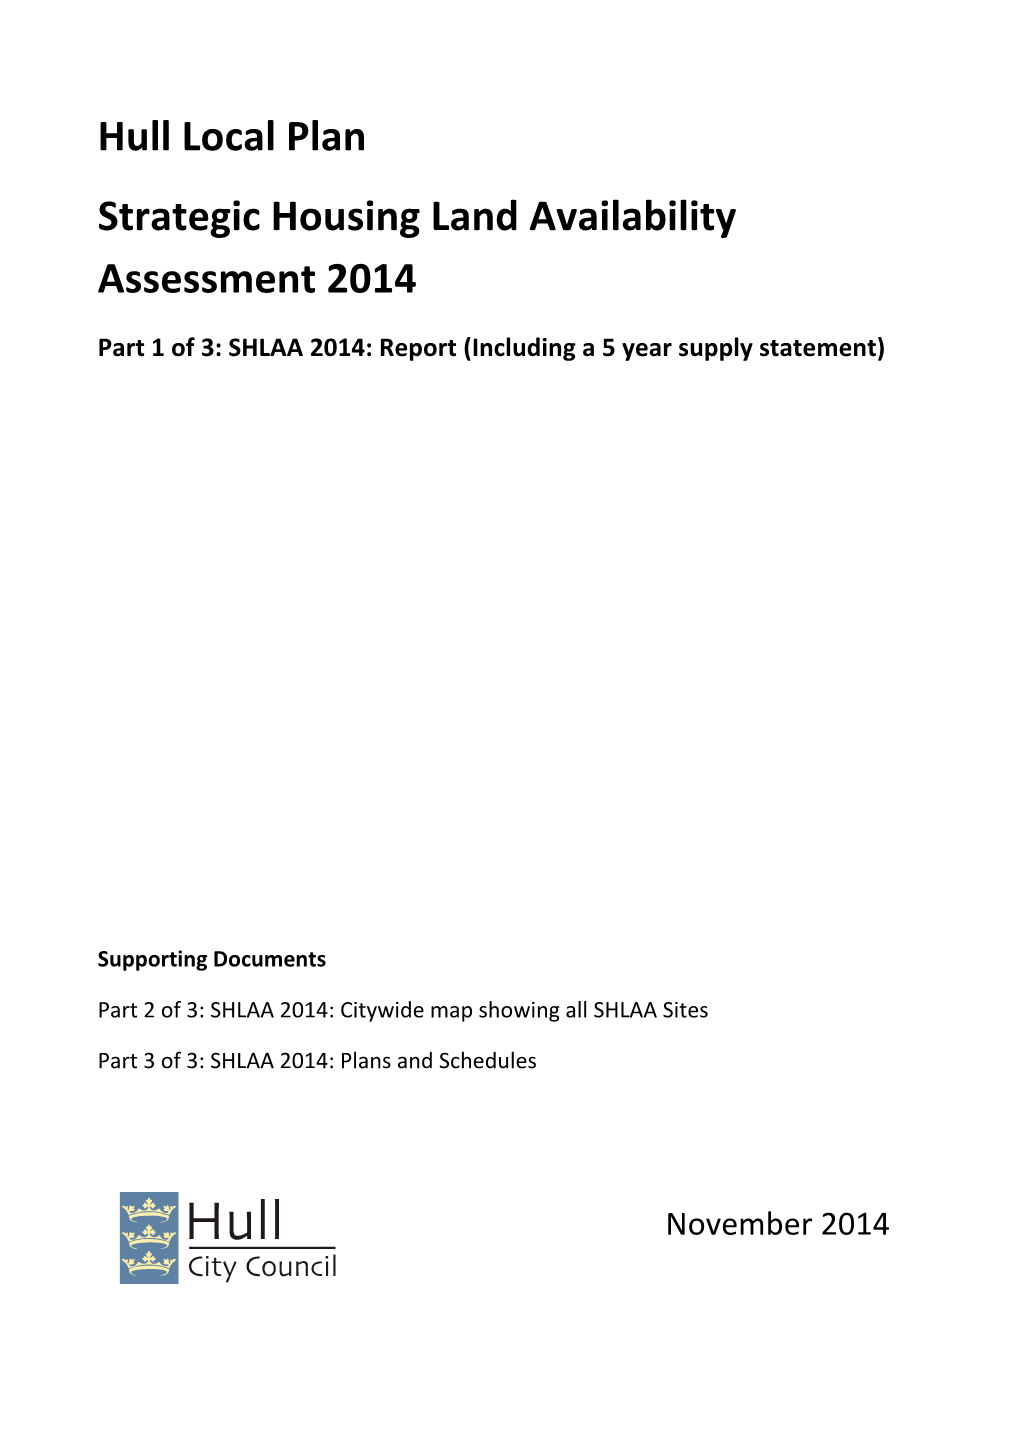 Hull Local Plan Strategic Housing Land Availability Assessment 2014